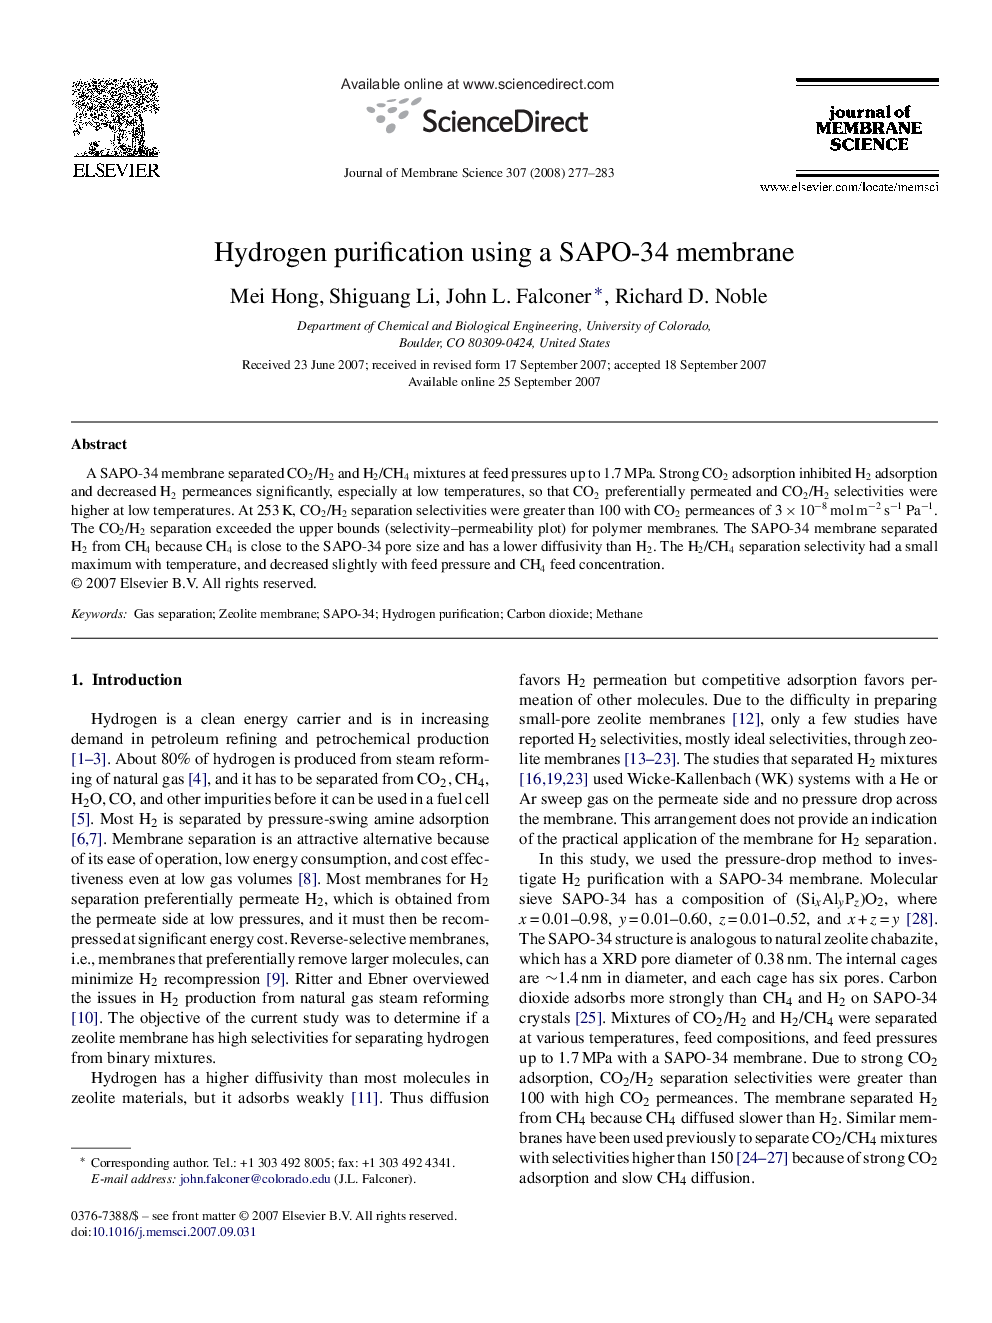 Hydrogen purification using a SAPO-34 membrane